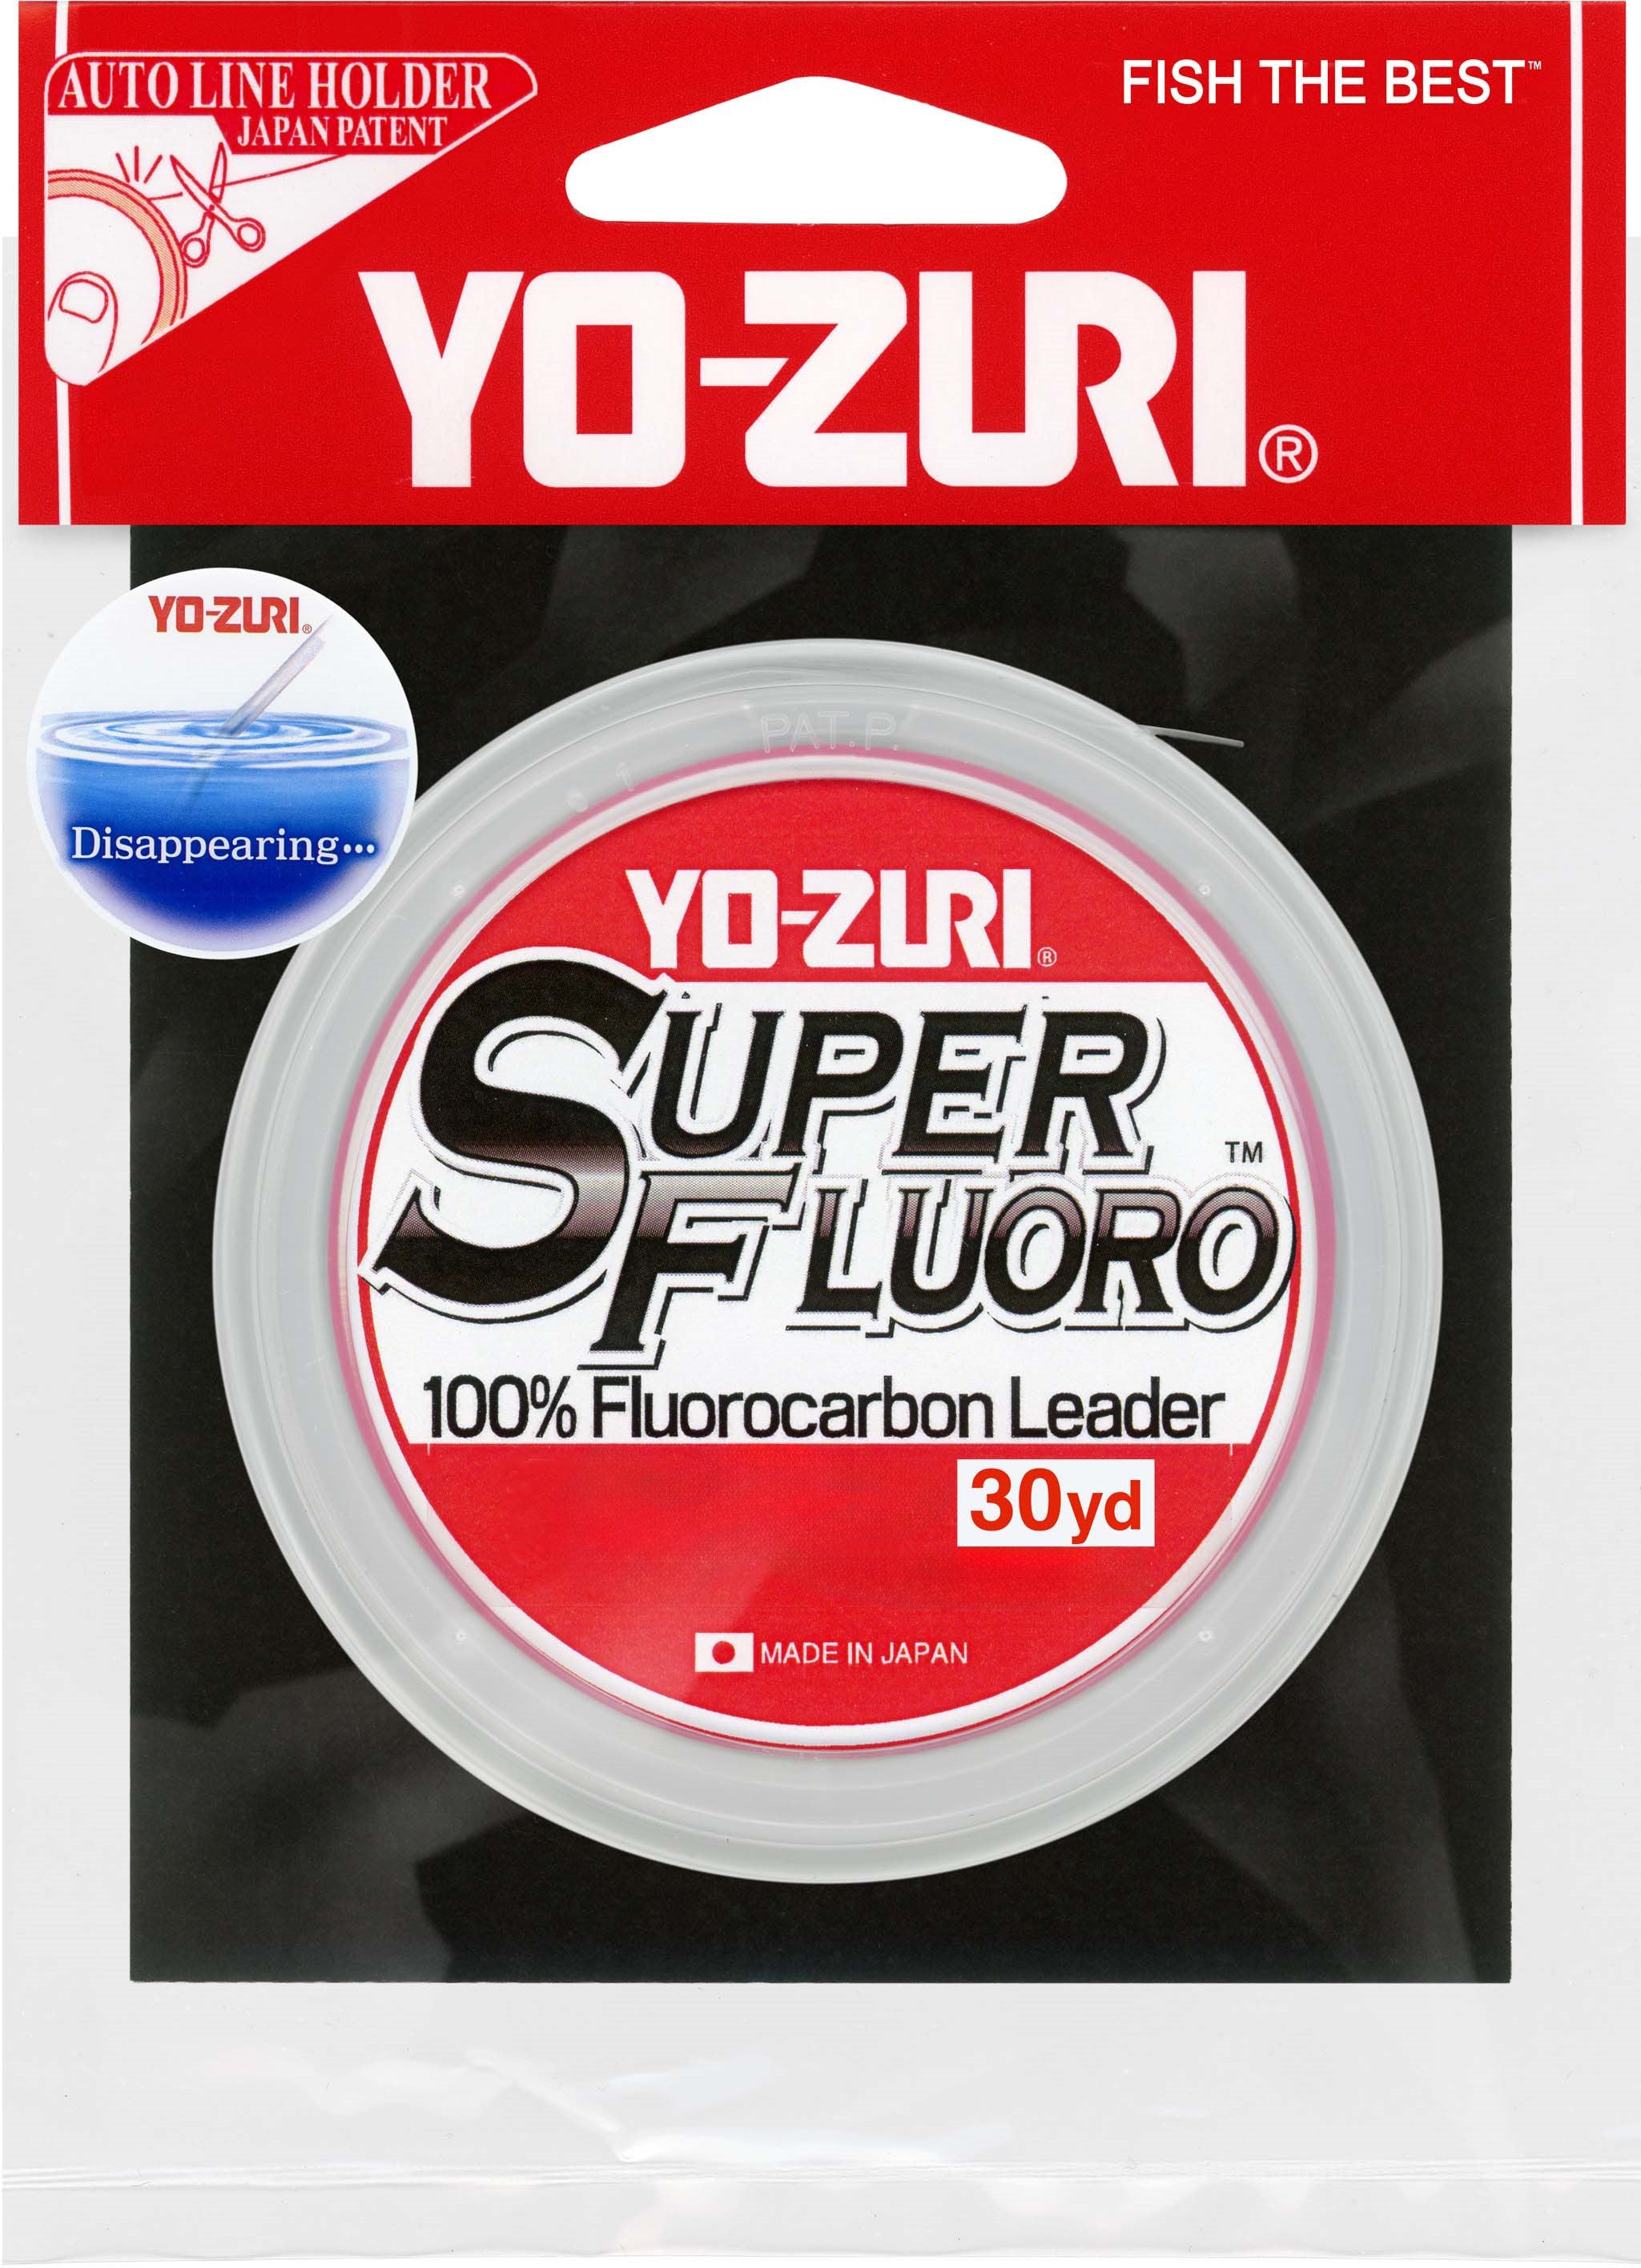 Yo-Zuri: Fish the Best — Discount Tackle